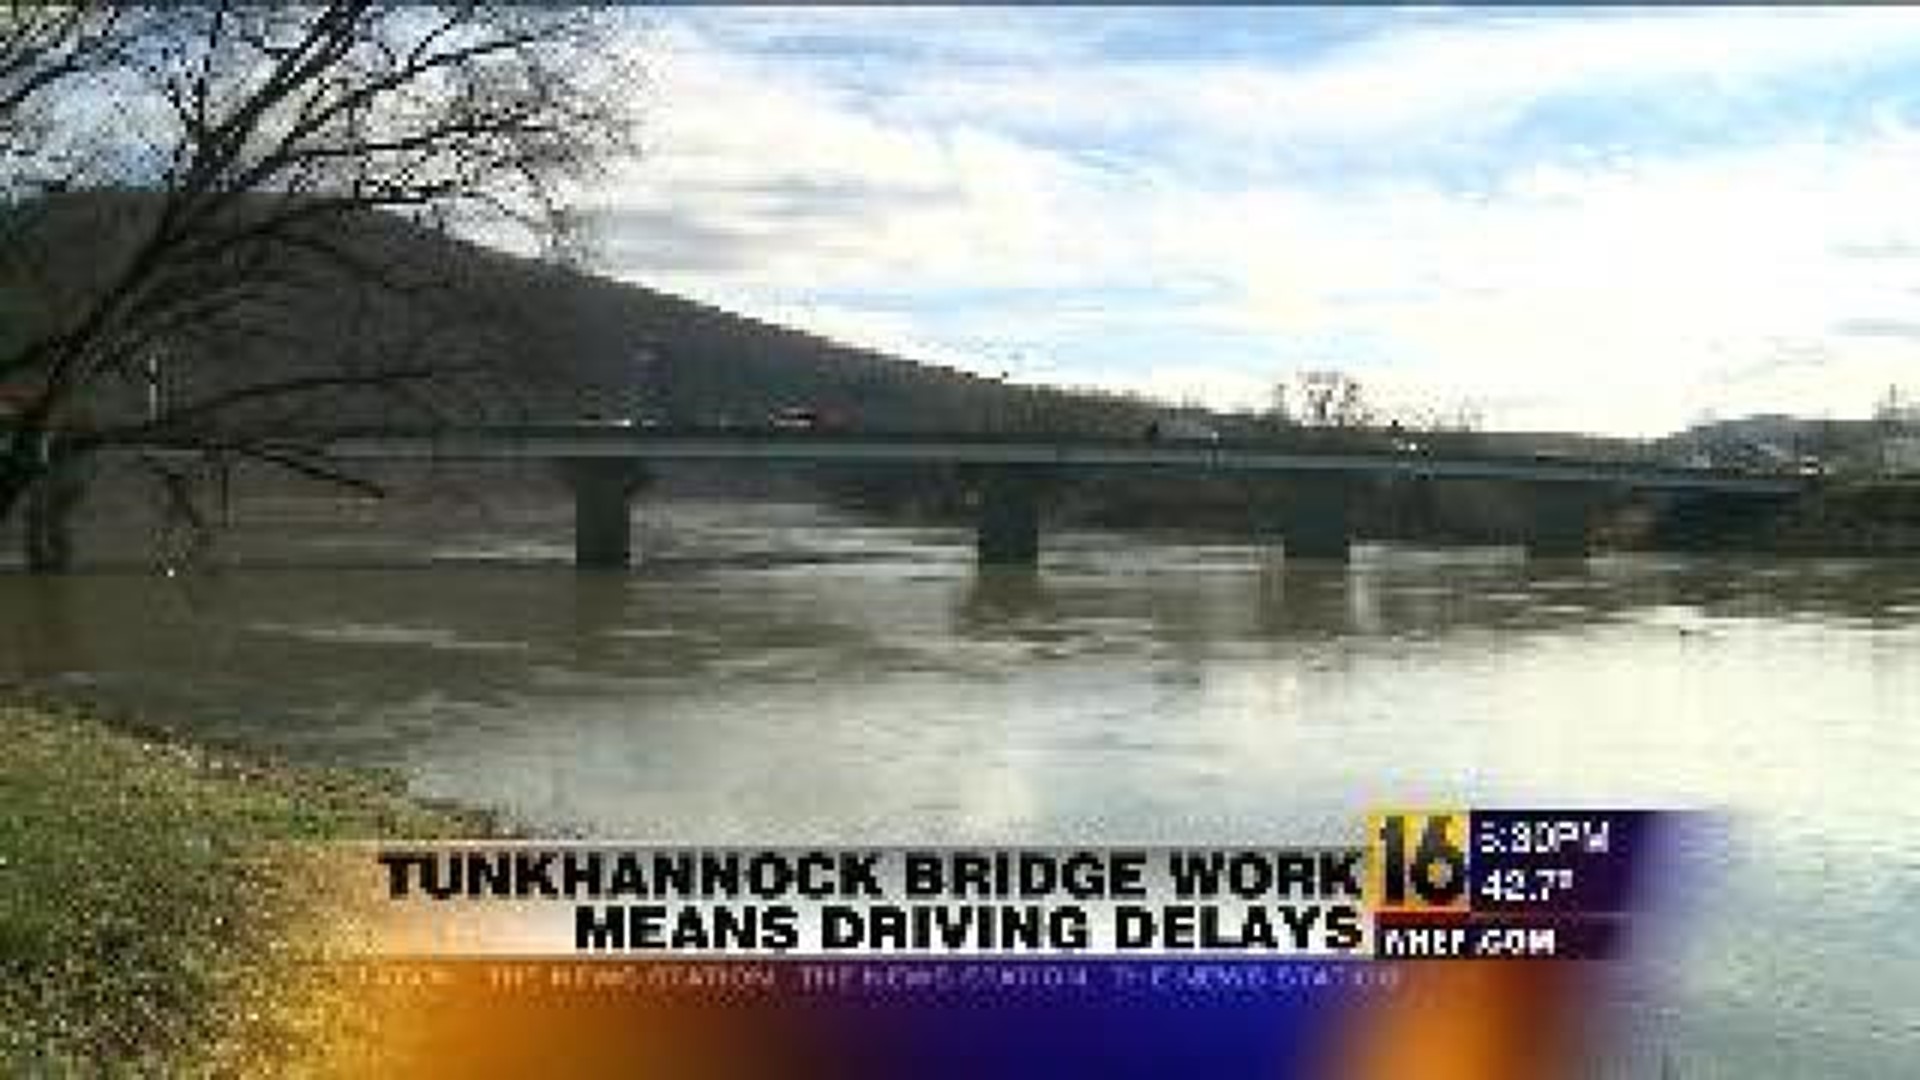 Tunkhannock Bridge Work Means Driving Delays